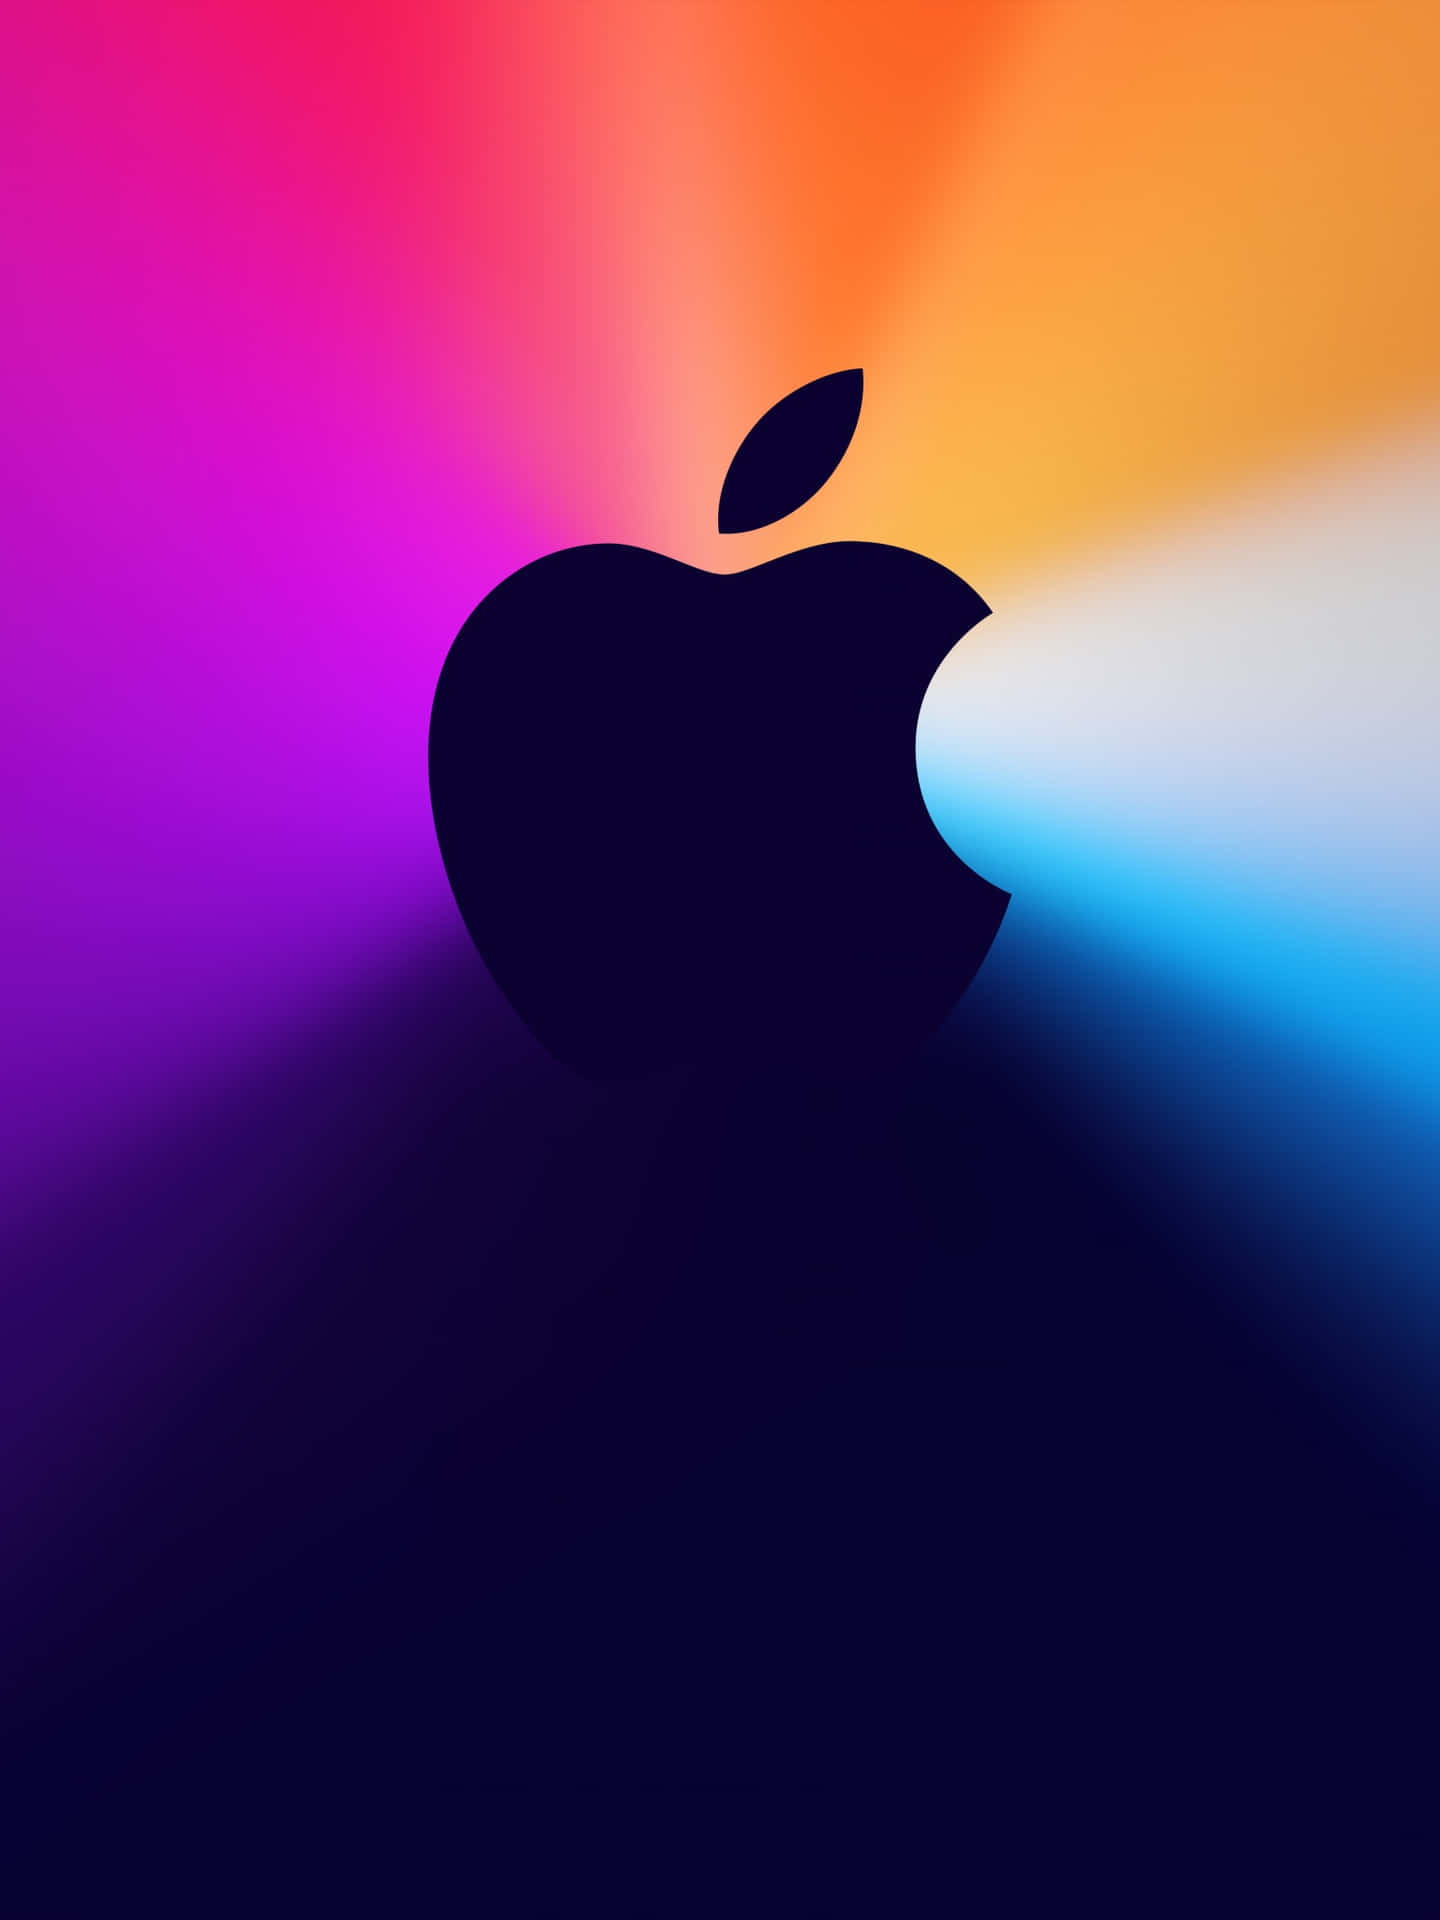 Download Sleek Apple Logo on Gradient Background | Wallpapers.com